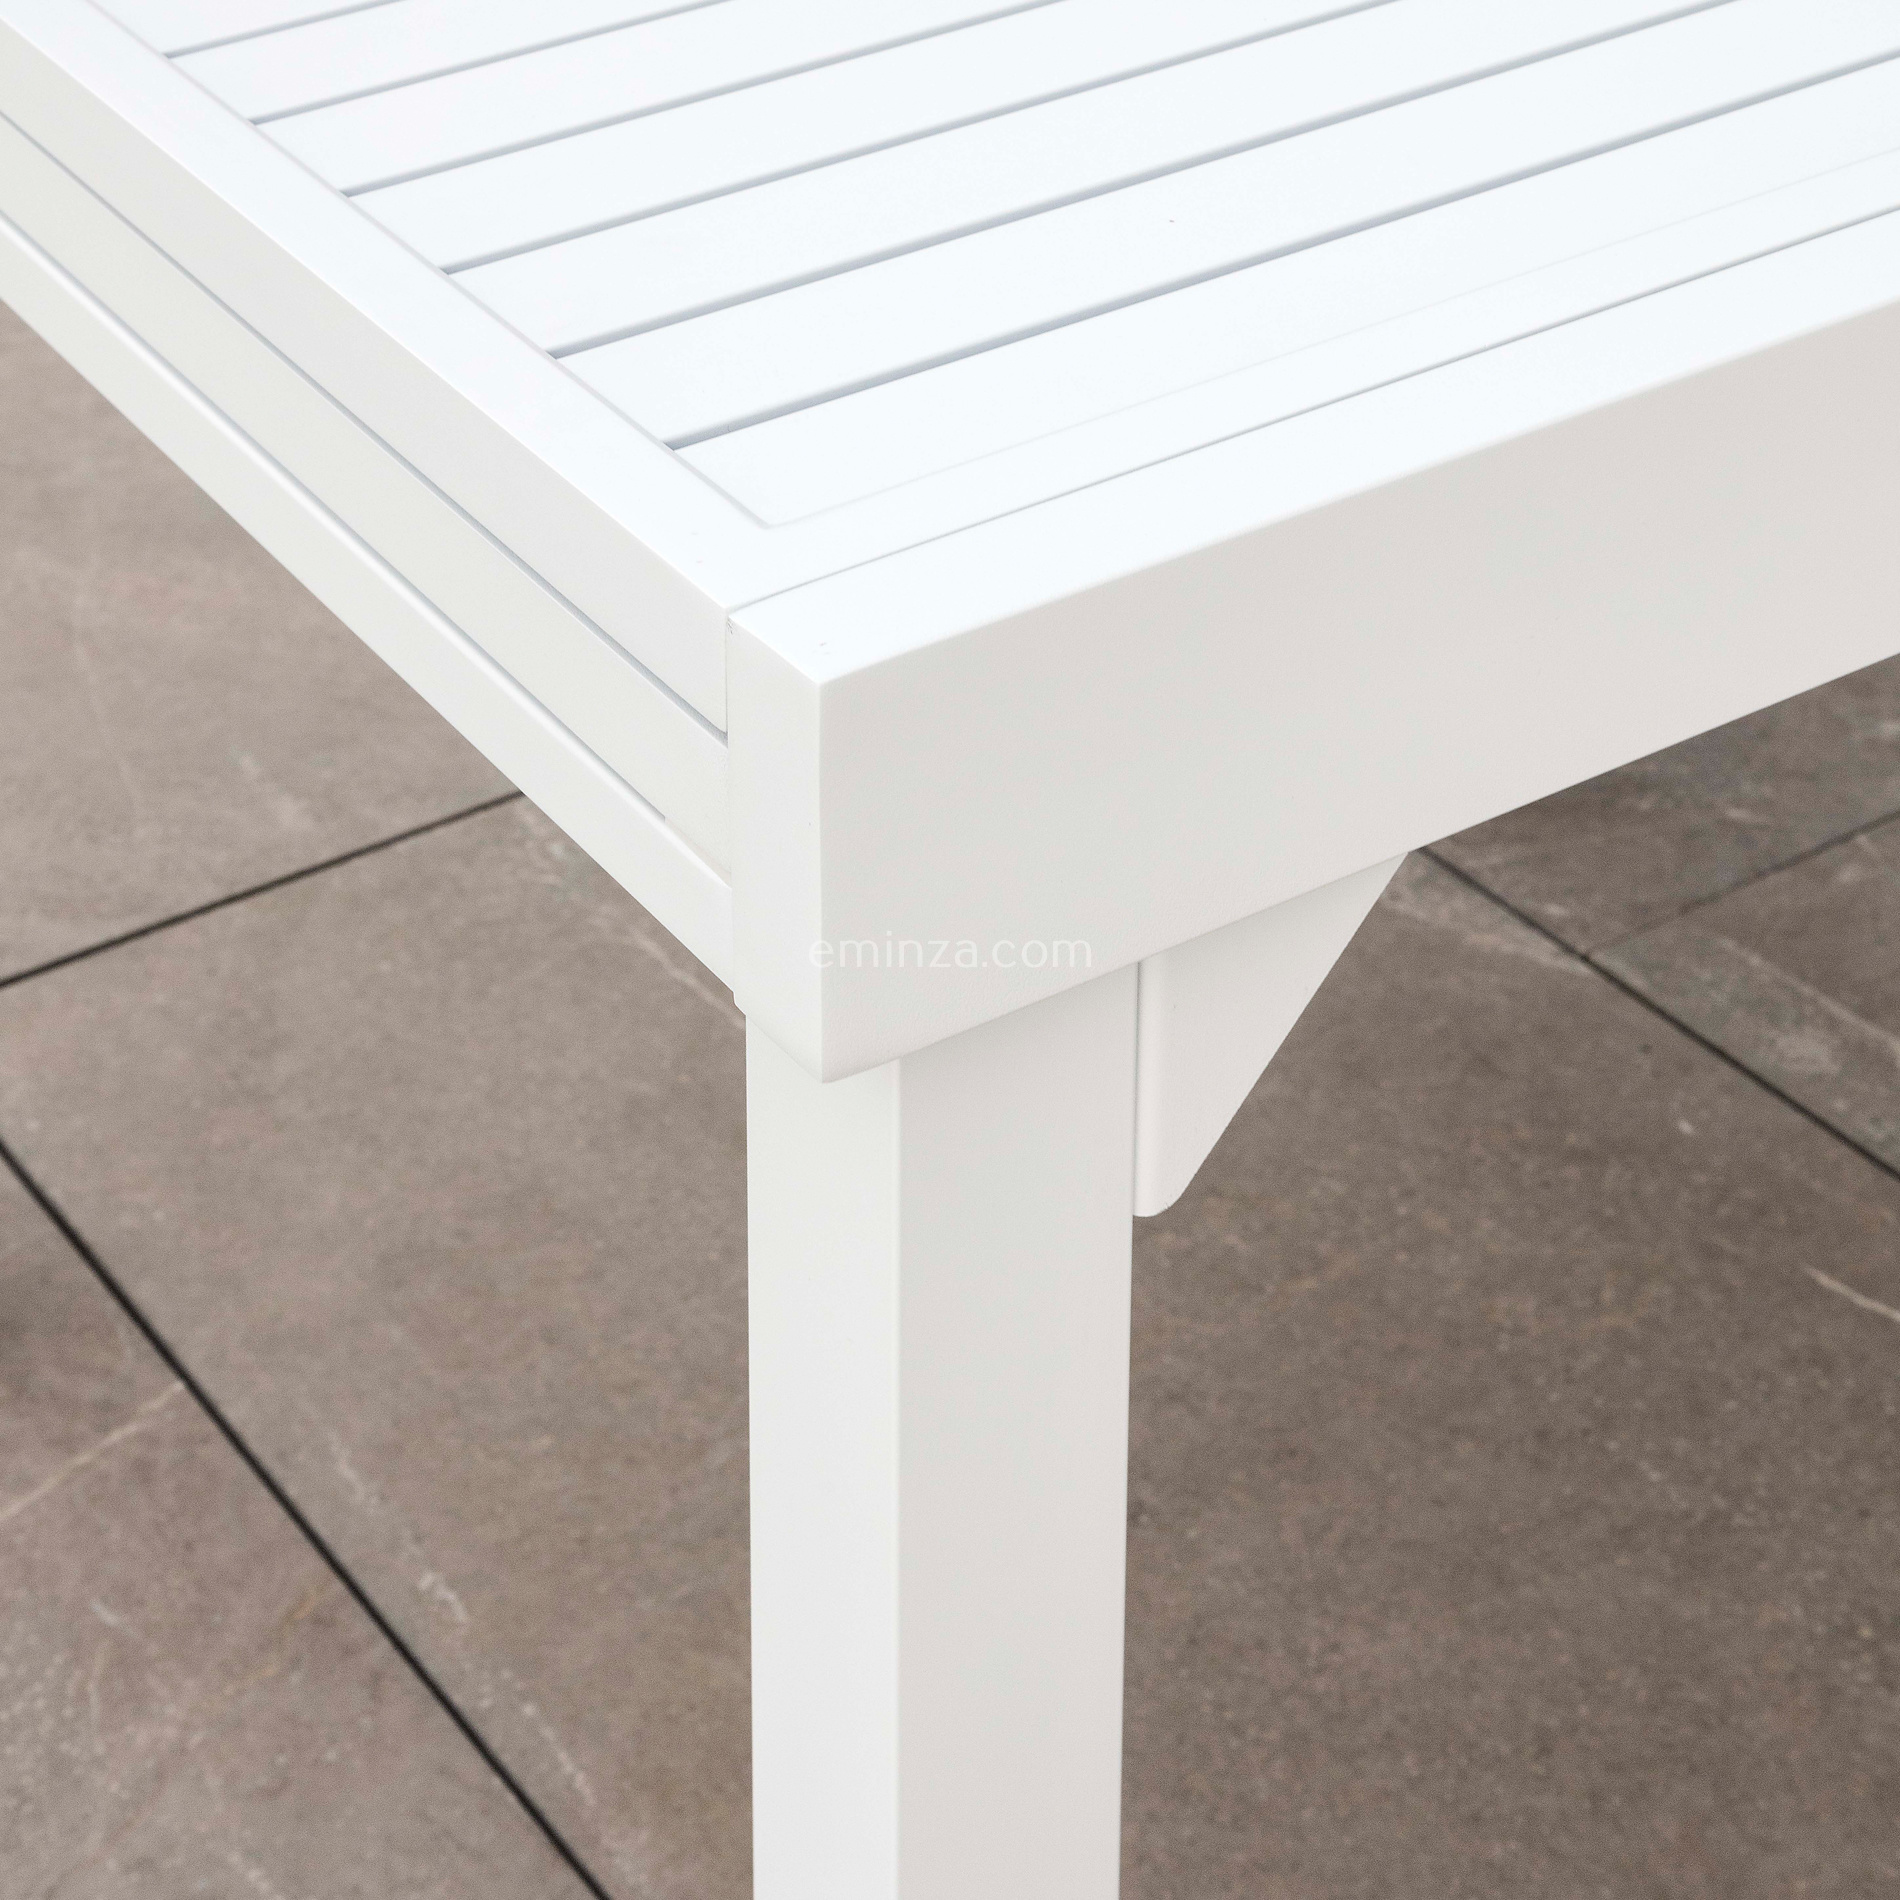 Carrefour - FARO - Table de jardin rectangulaire - Blanc - 909908